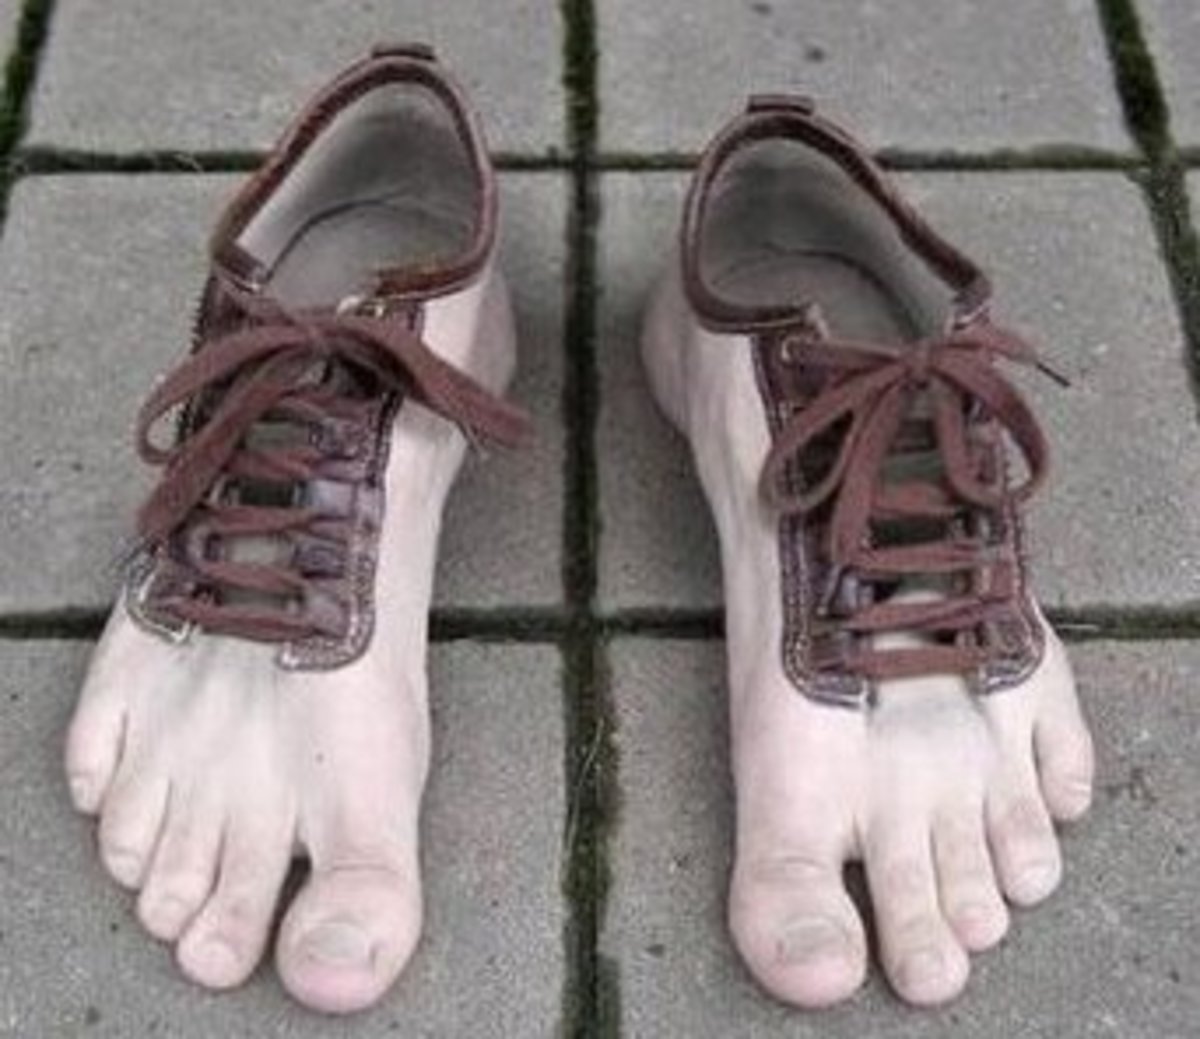 Skechers Shape Ups Walking Shoes Review, 59% OFF